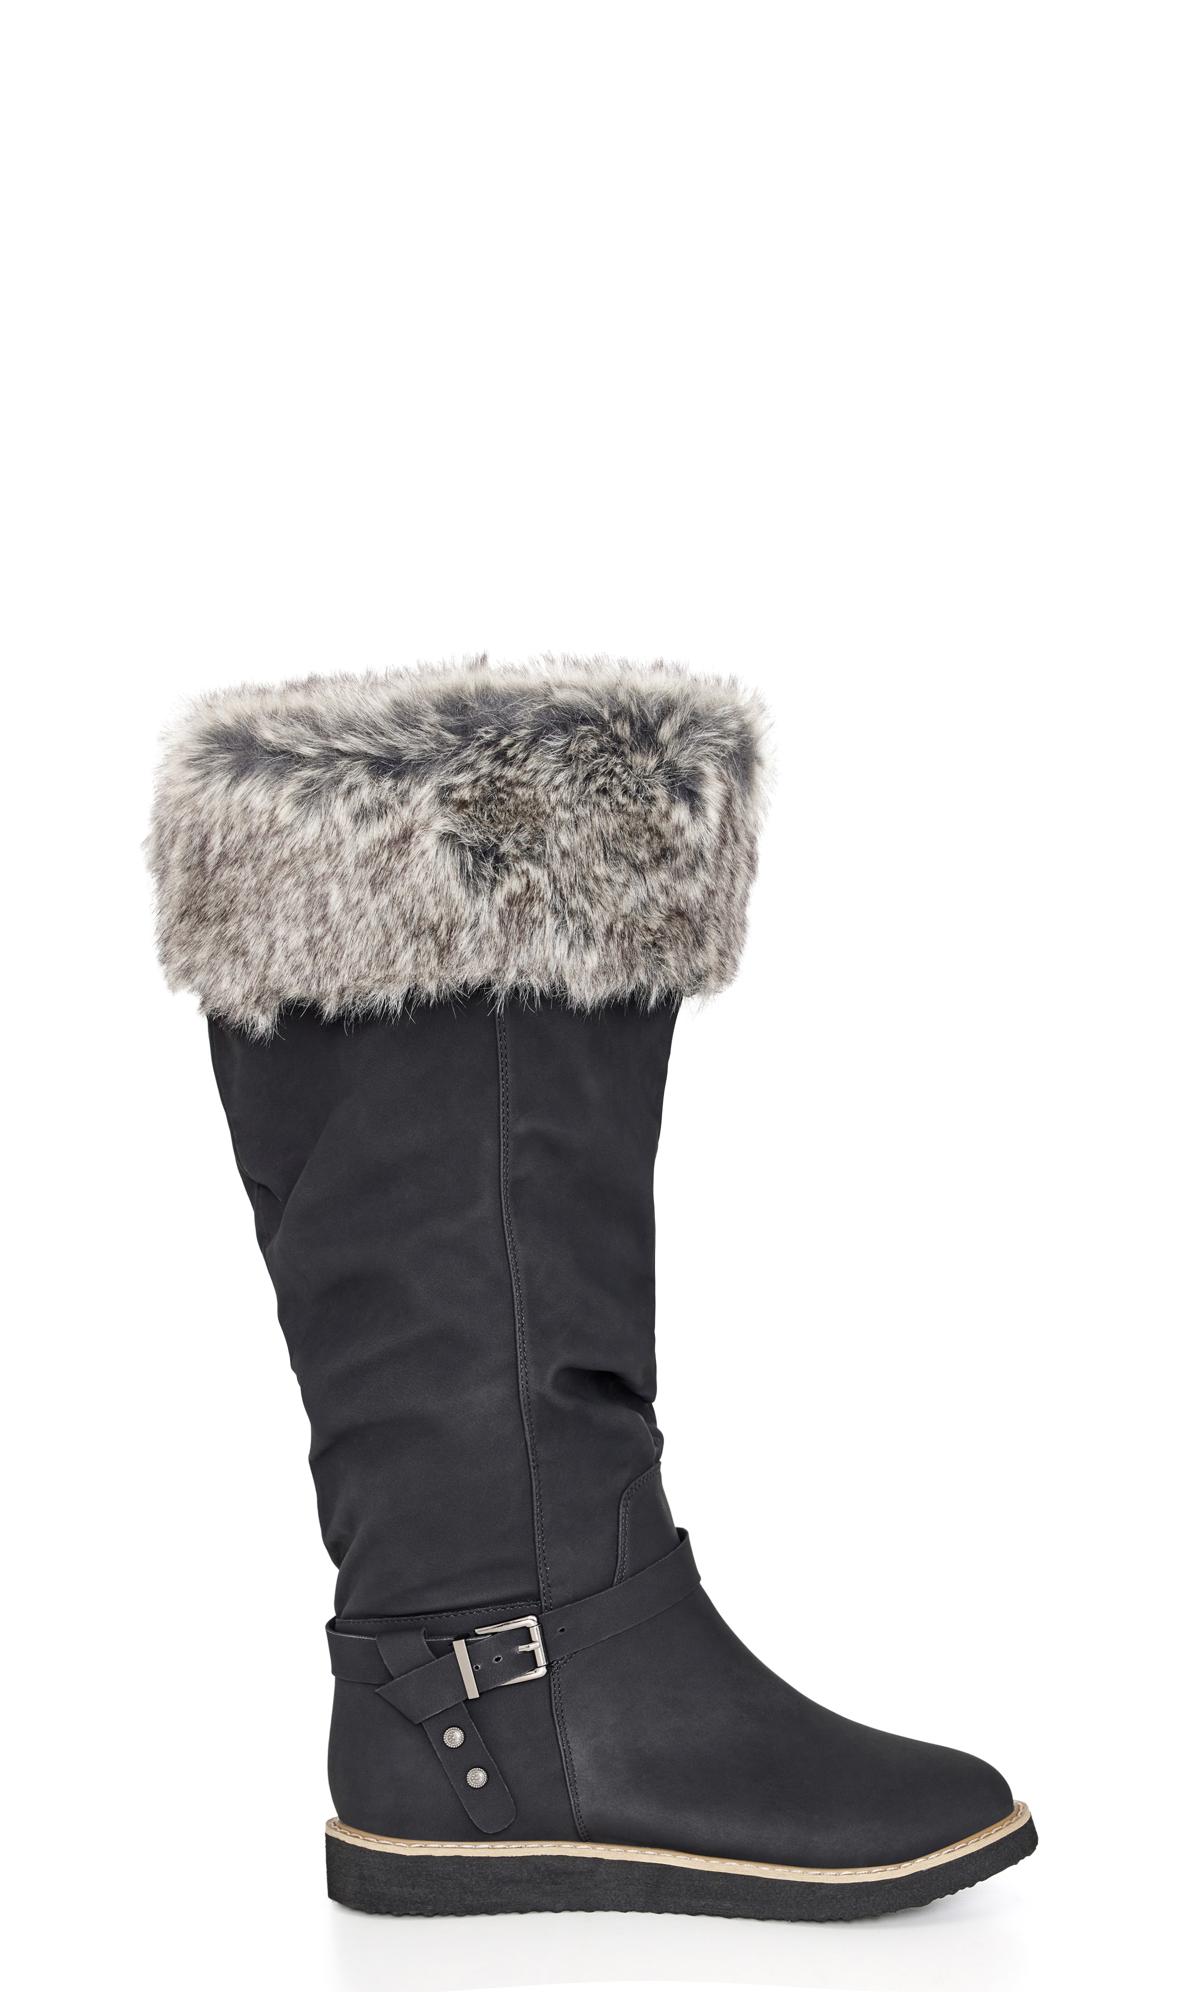 Evans Black Faux Fur Lined Knee High Snow Boots 2